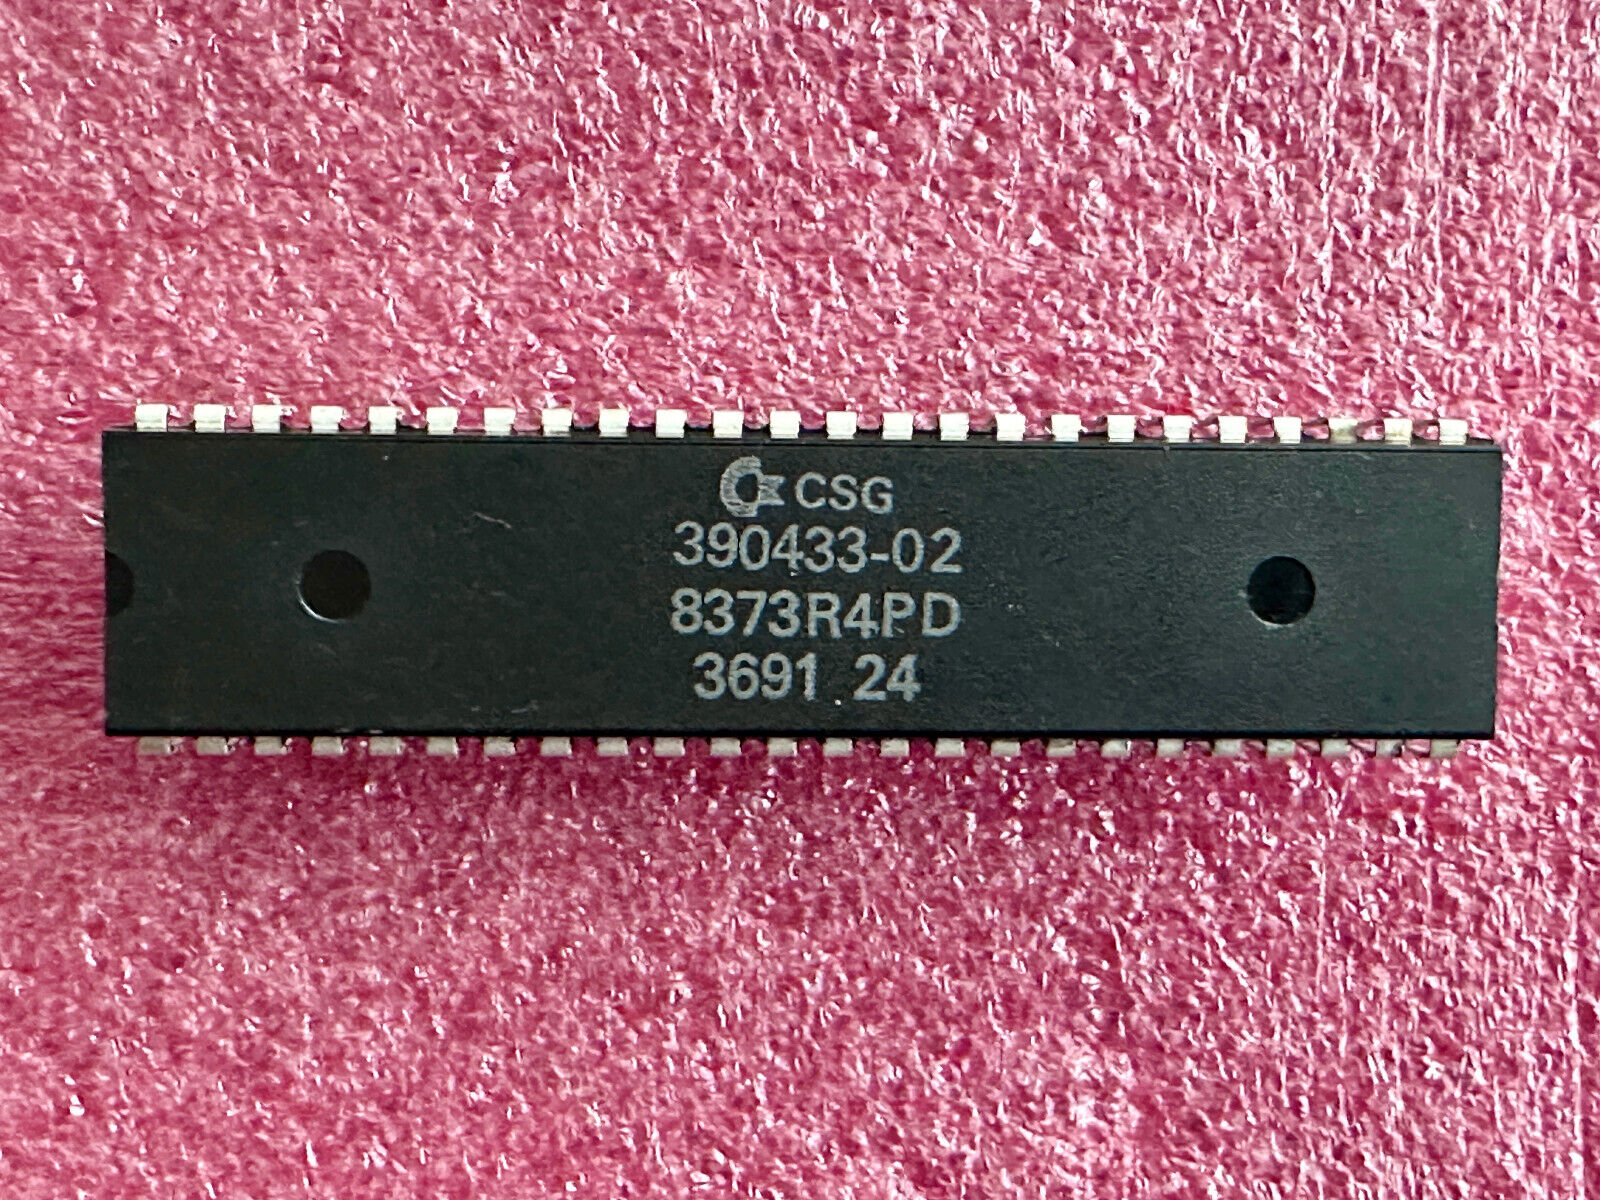 Super Denise 8373R4PD Csg , Video Control Chip, Amiga 500/A2000 - 36 91